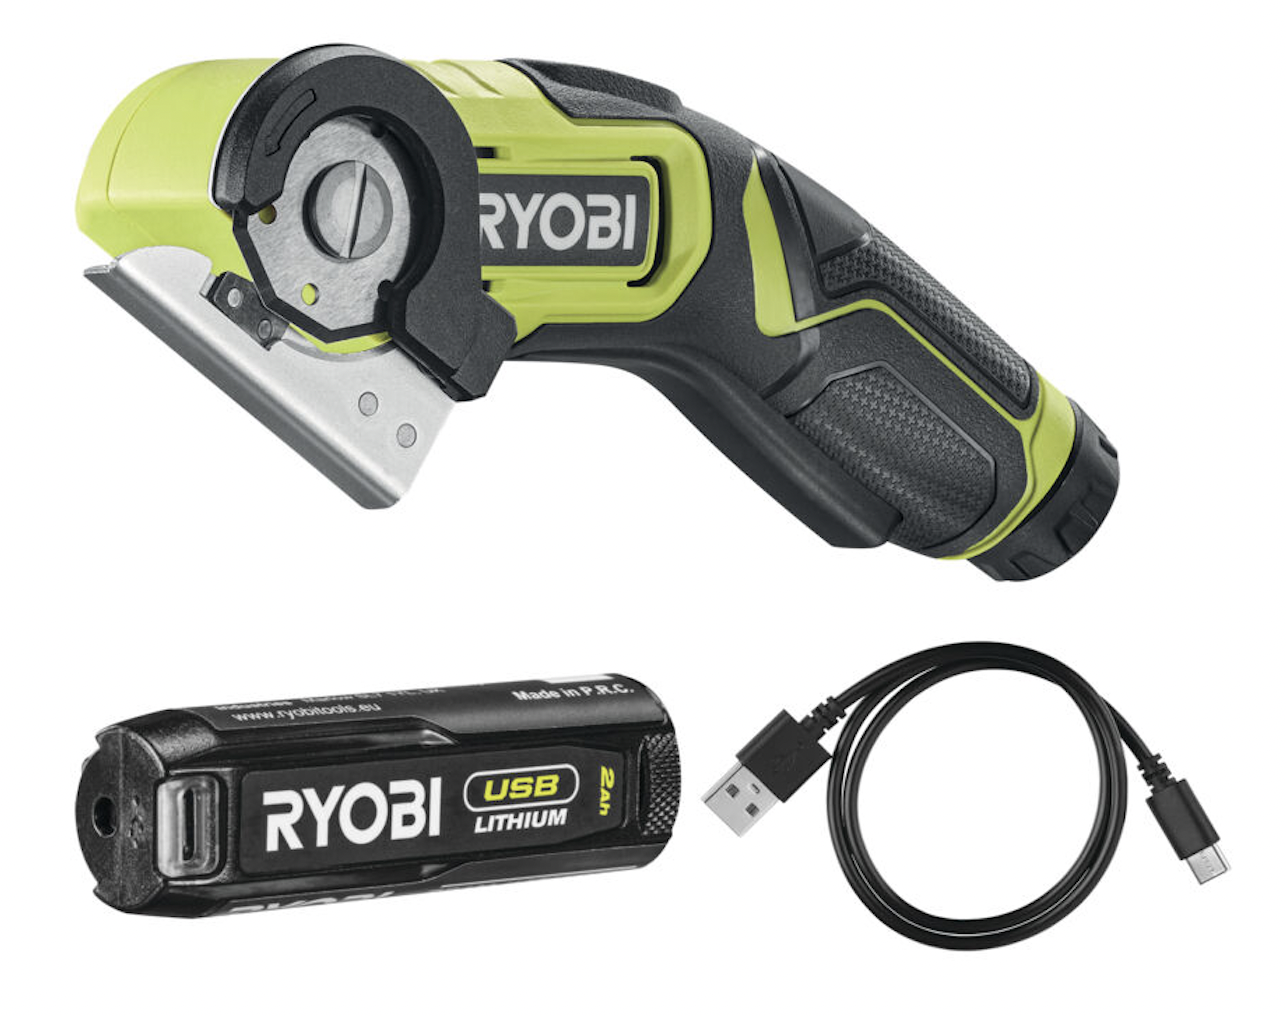 RYOBI Introduces USB 4V Lithium Power Tool Range